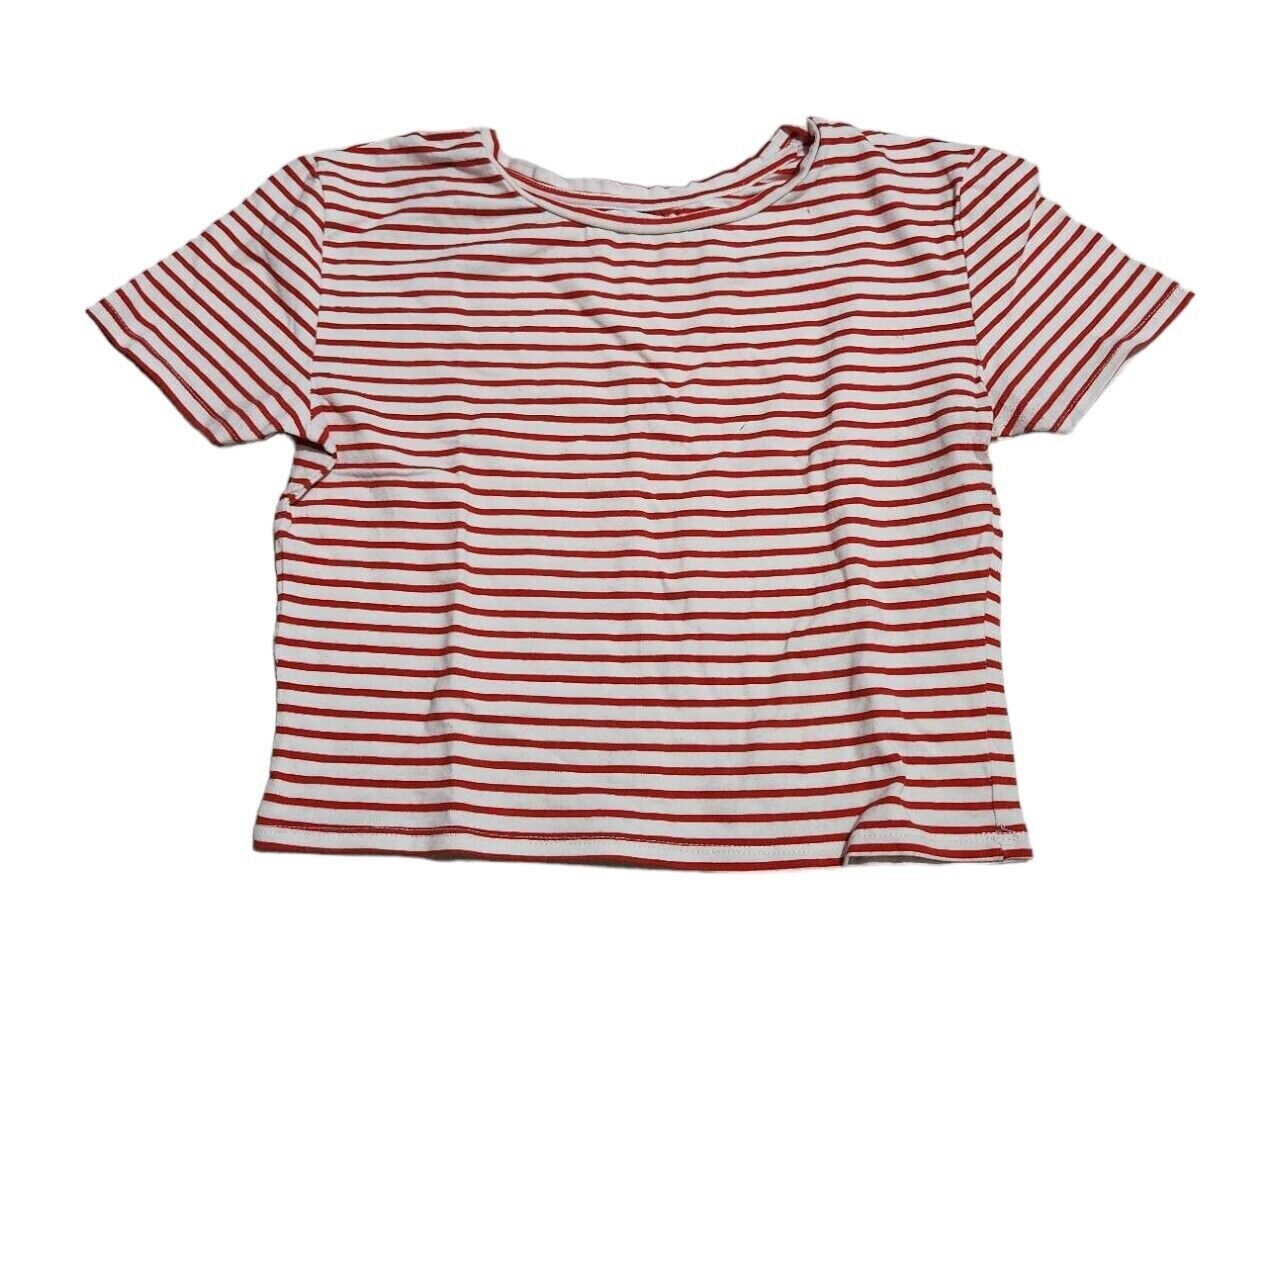 Zara Red & White Stripes Cropped T-Shirt